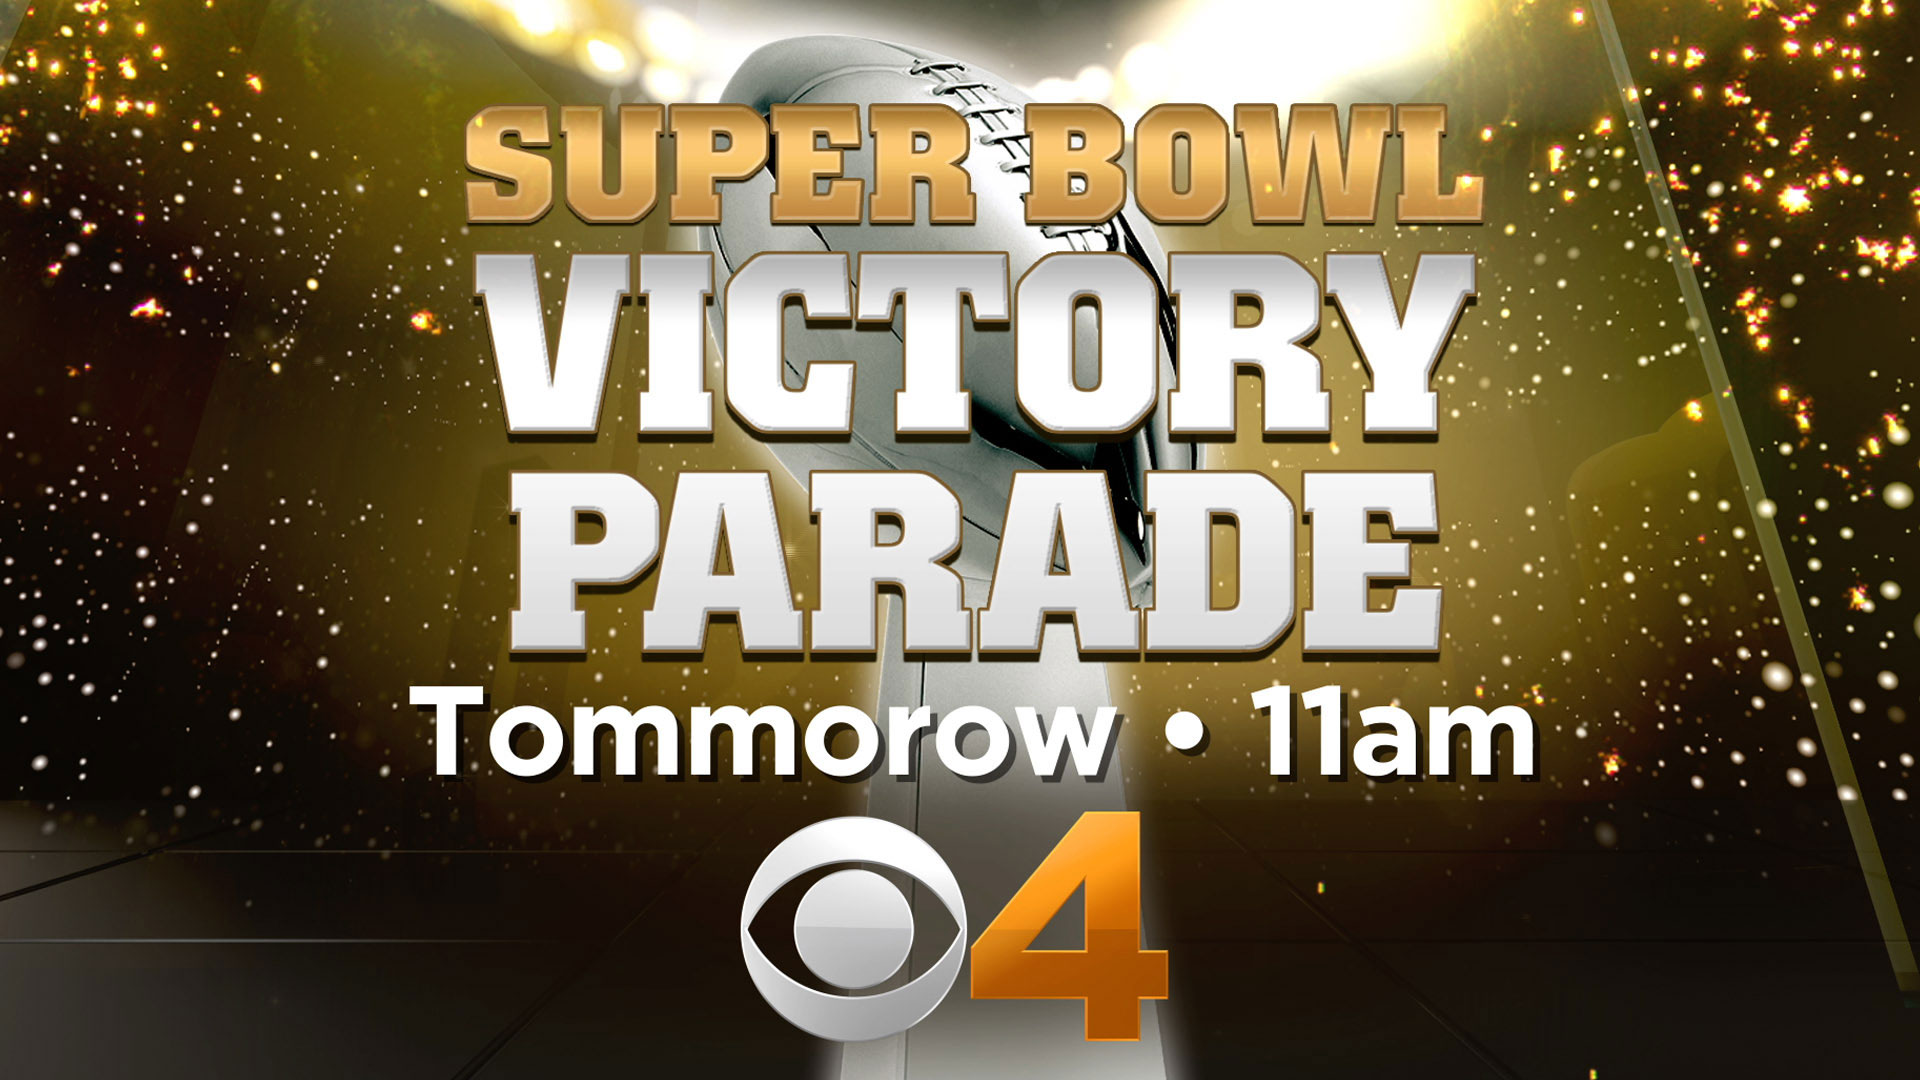 Victory Parade tomorrow